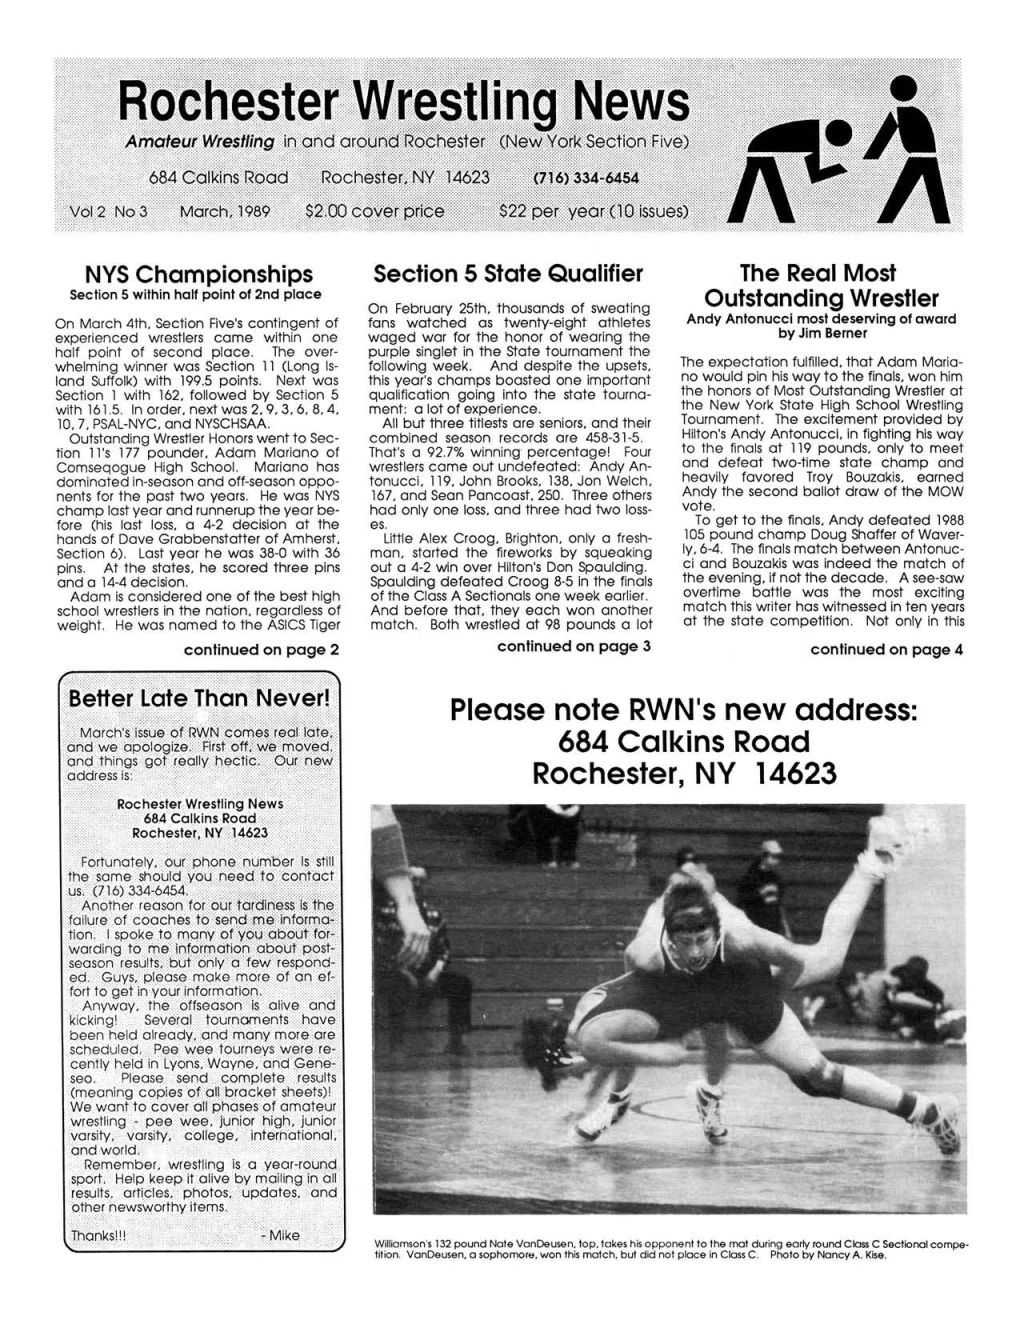 Rochester Wrestling News, Vol. 2, No. 3 (March 1989)